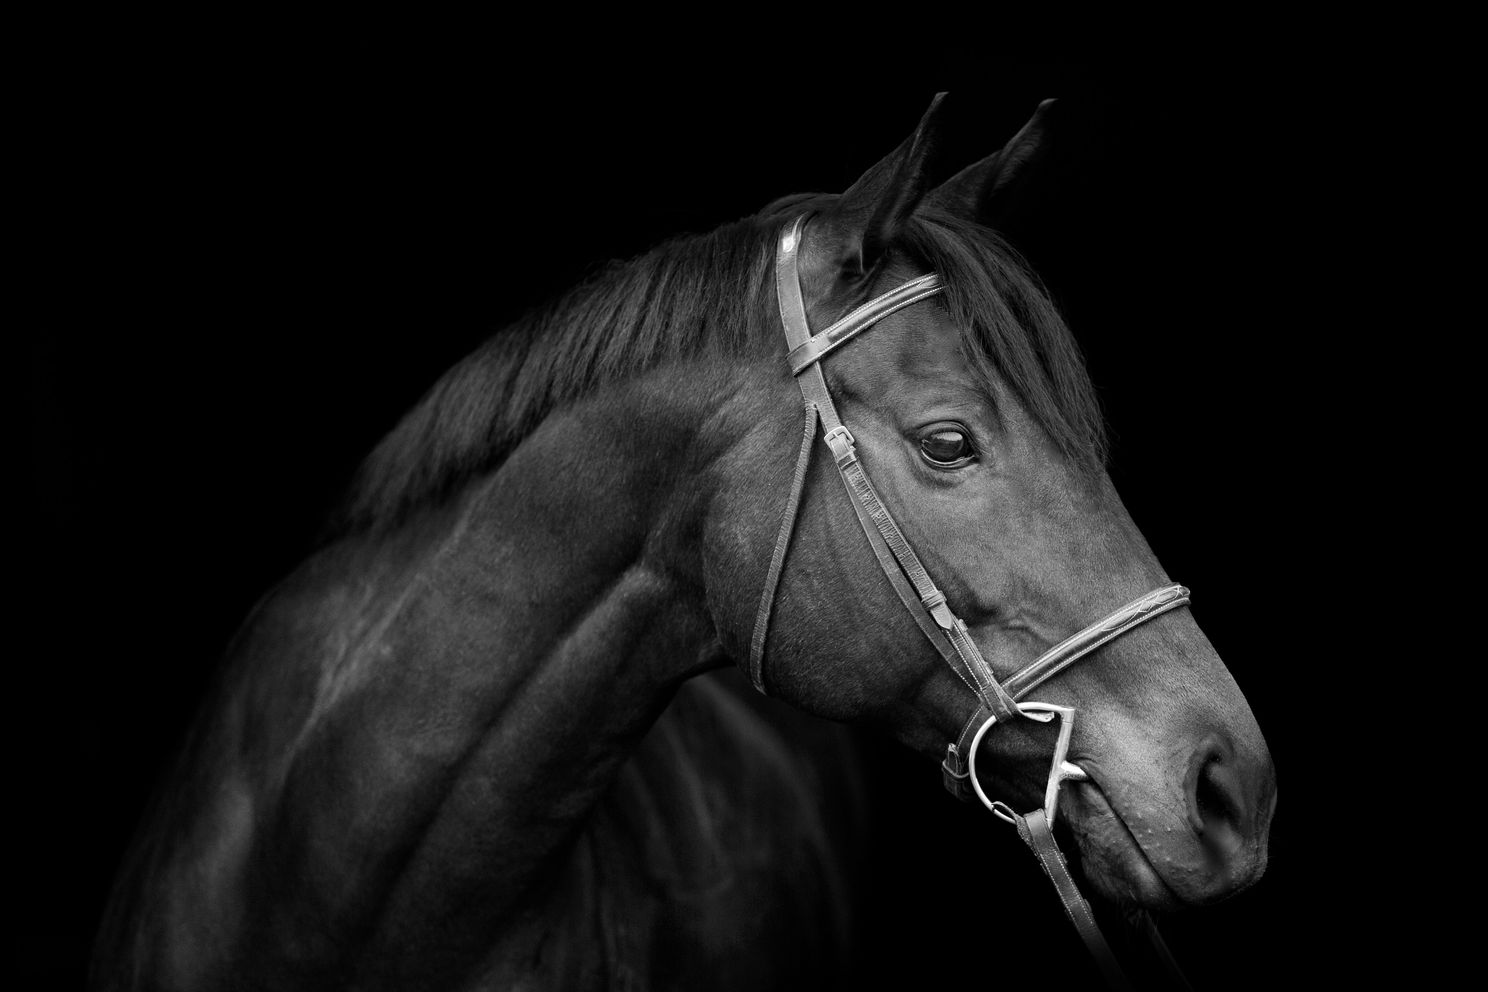 thoroughbred-horse-on-black-background.jpg 1